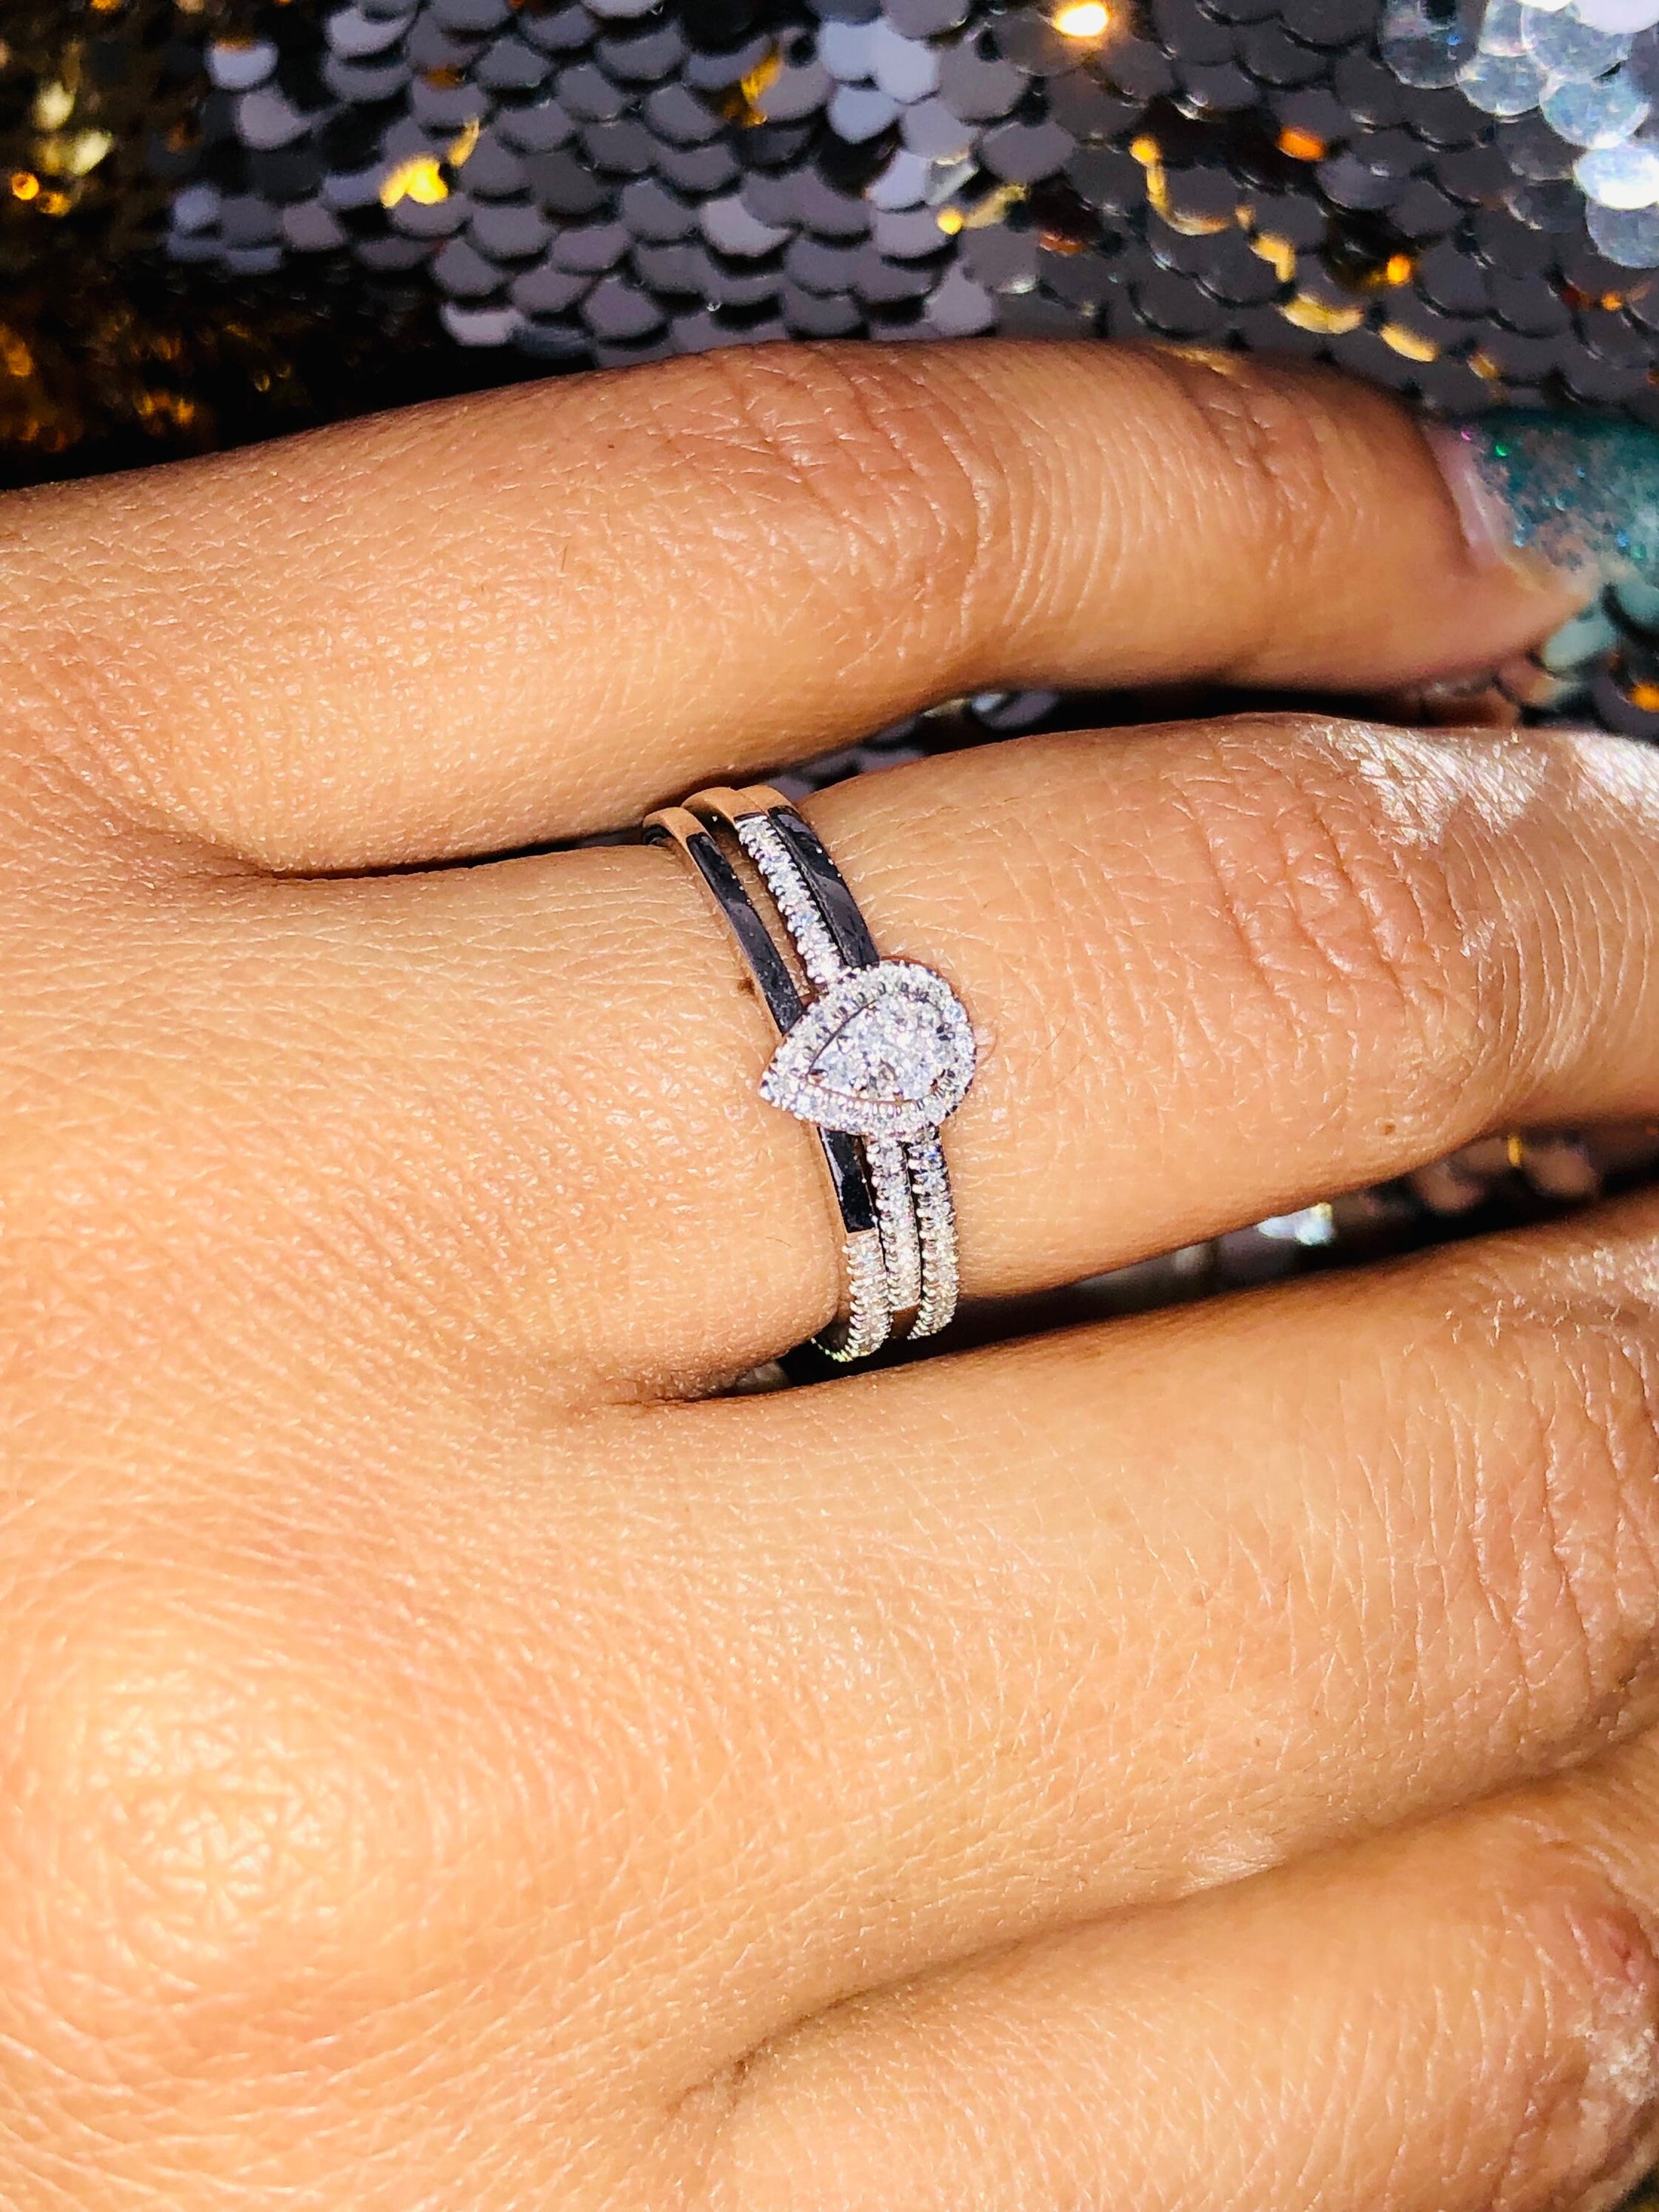 Real diamond bridal engagement ring set so beautifully classy elegant gift 10k white gold vermeil natural diamonds not CZ not moissanite